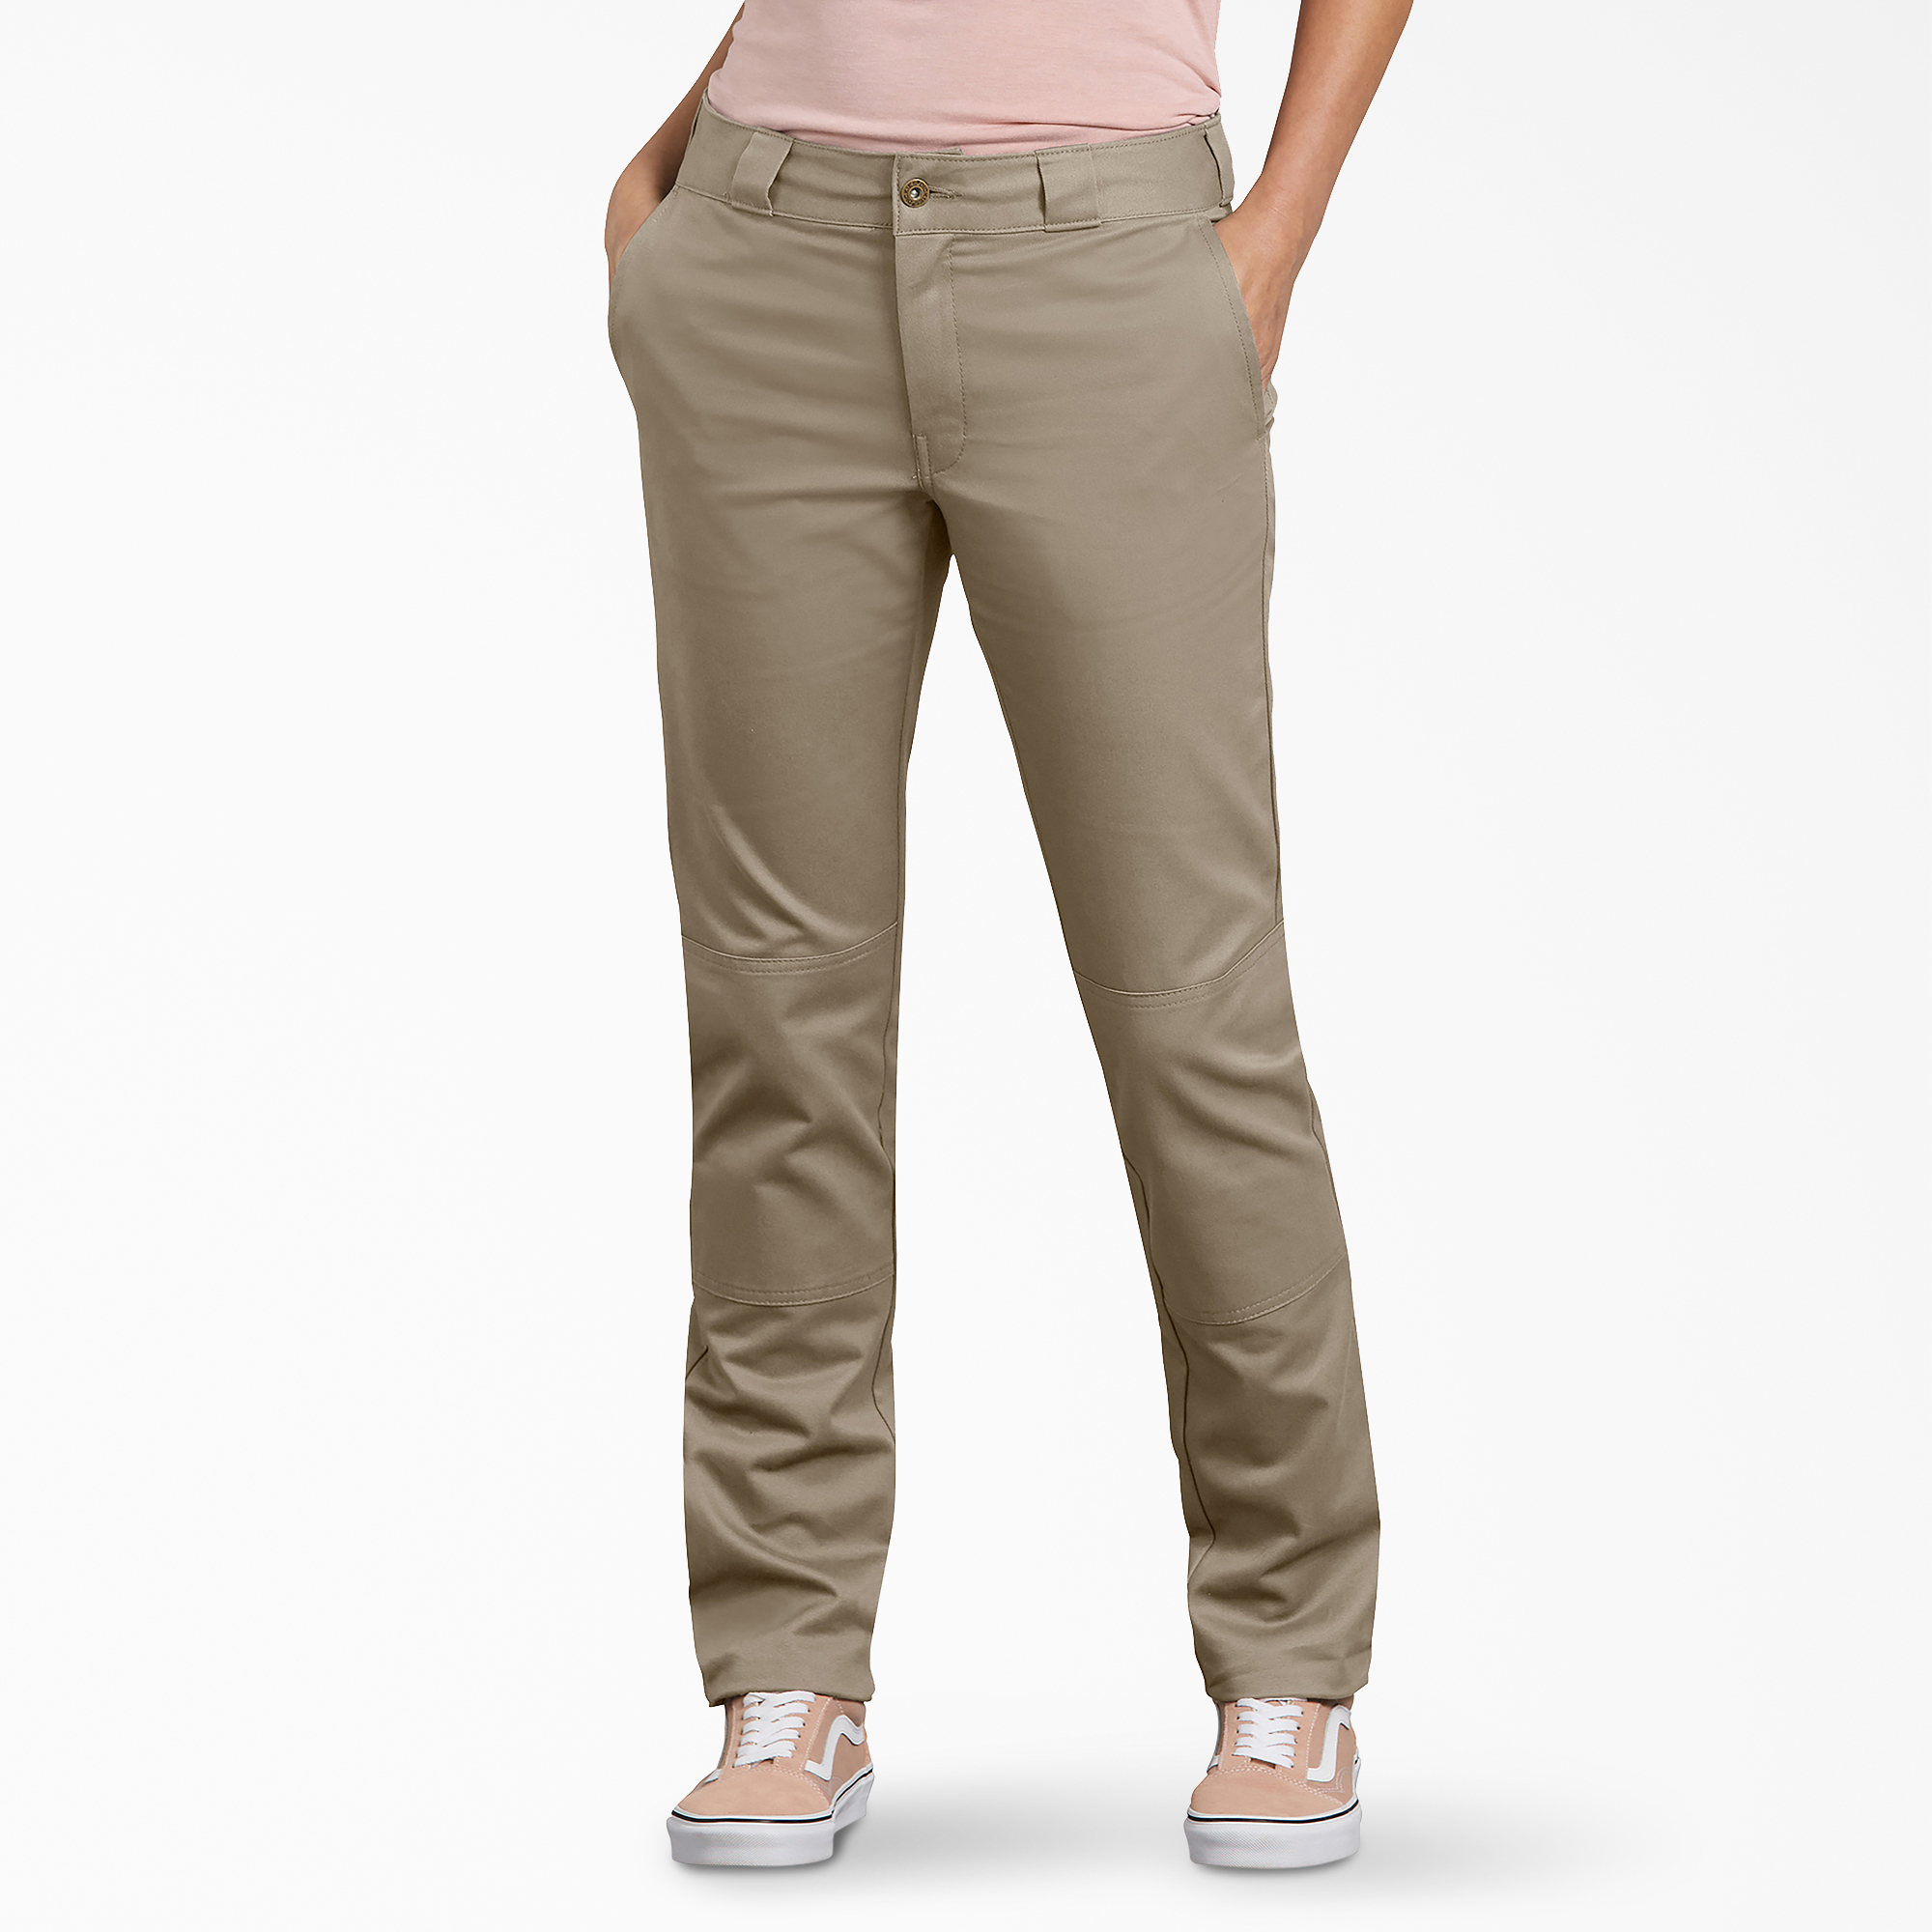 Women's Slim Fit Double Knee Pants - Desert Khaki (DS)